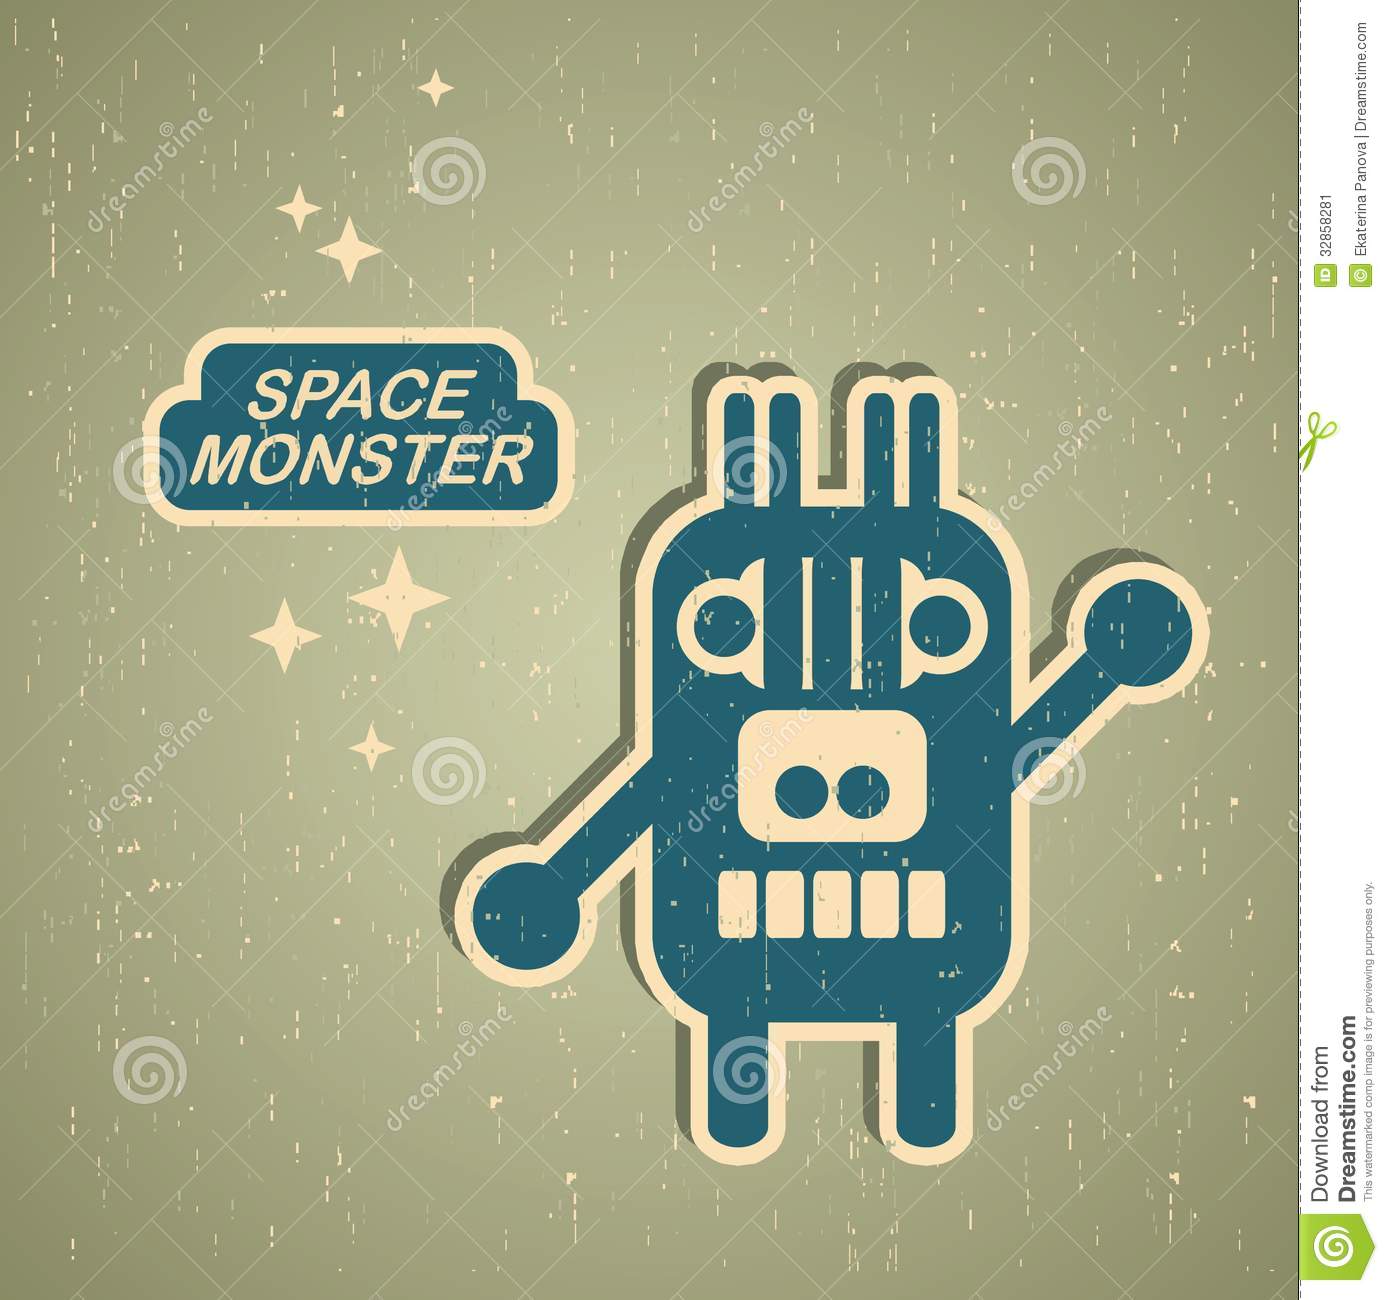 Vintage Monster  Stock Image   Image  32858281